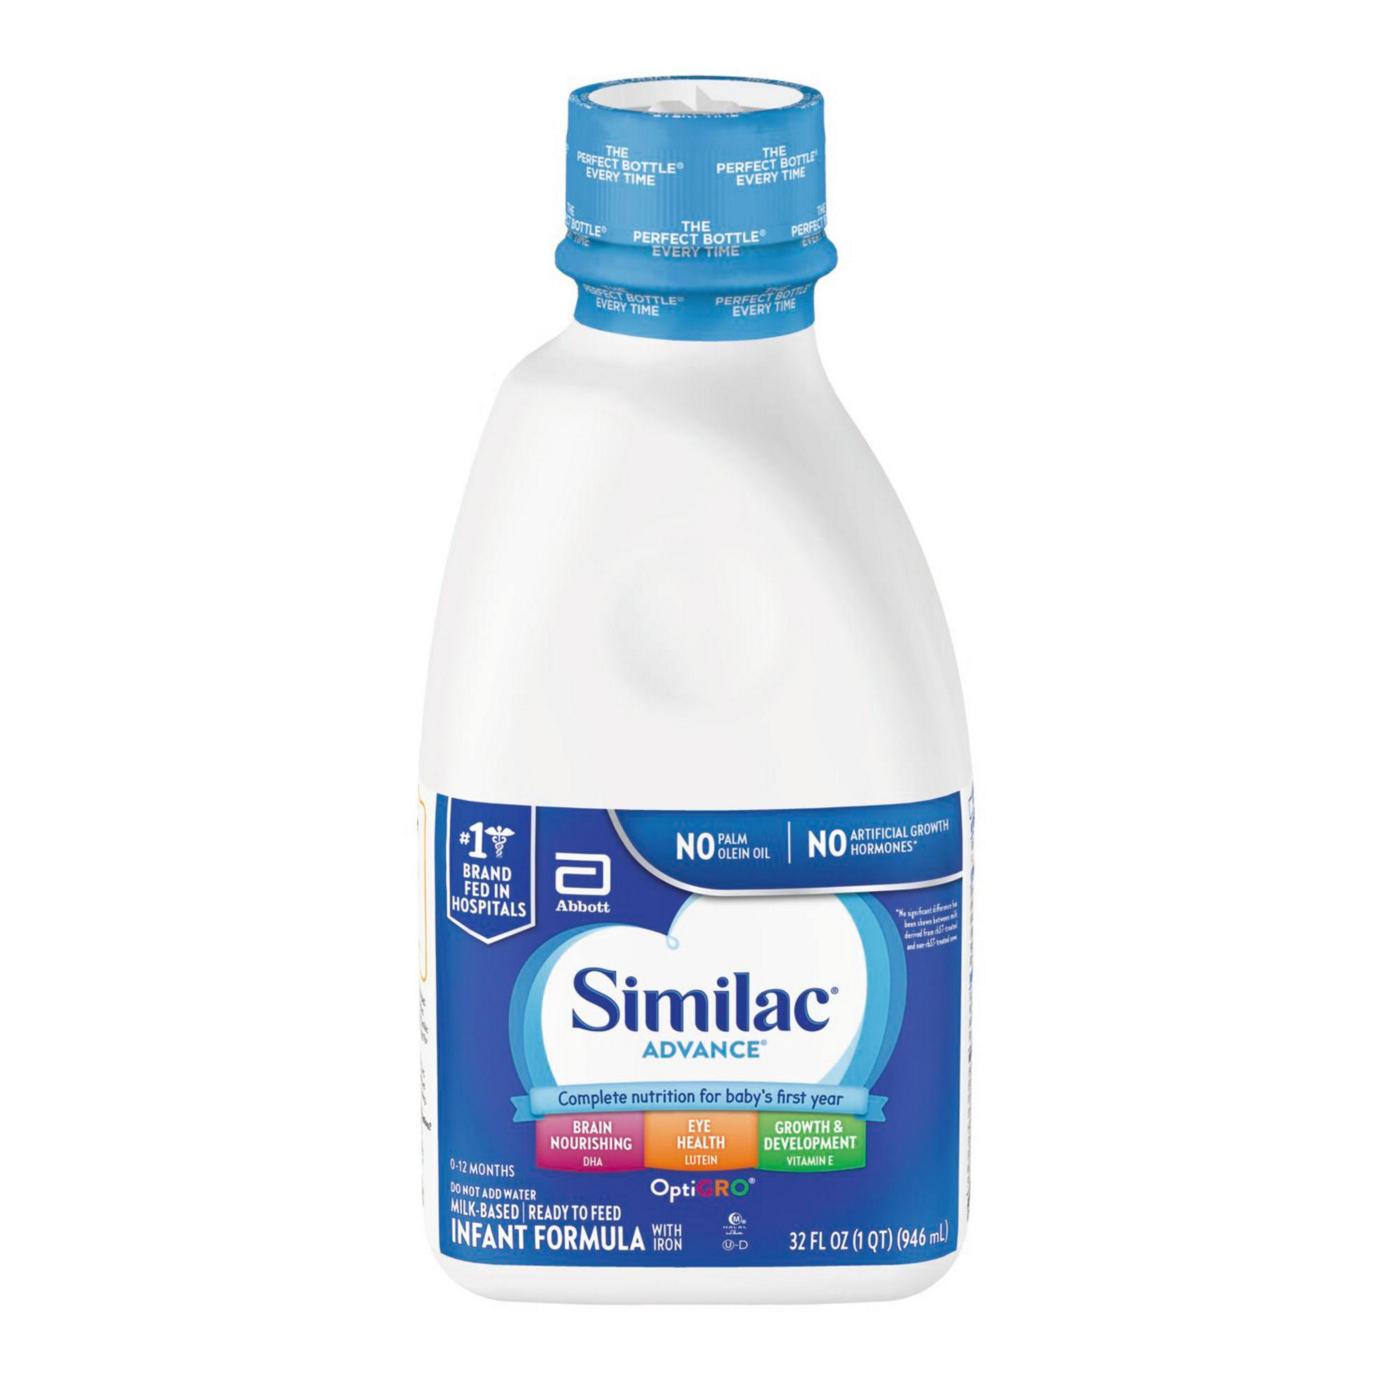 Similac Advance Milk-Based Ready-to-Feed Infant Formula with Iron; image 11 of 11